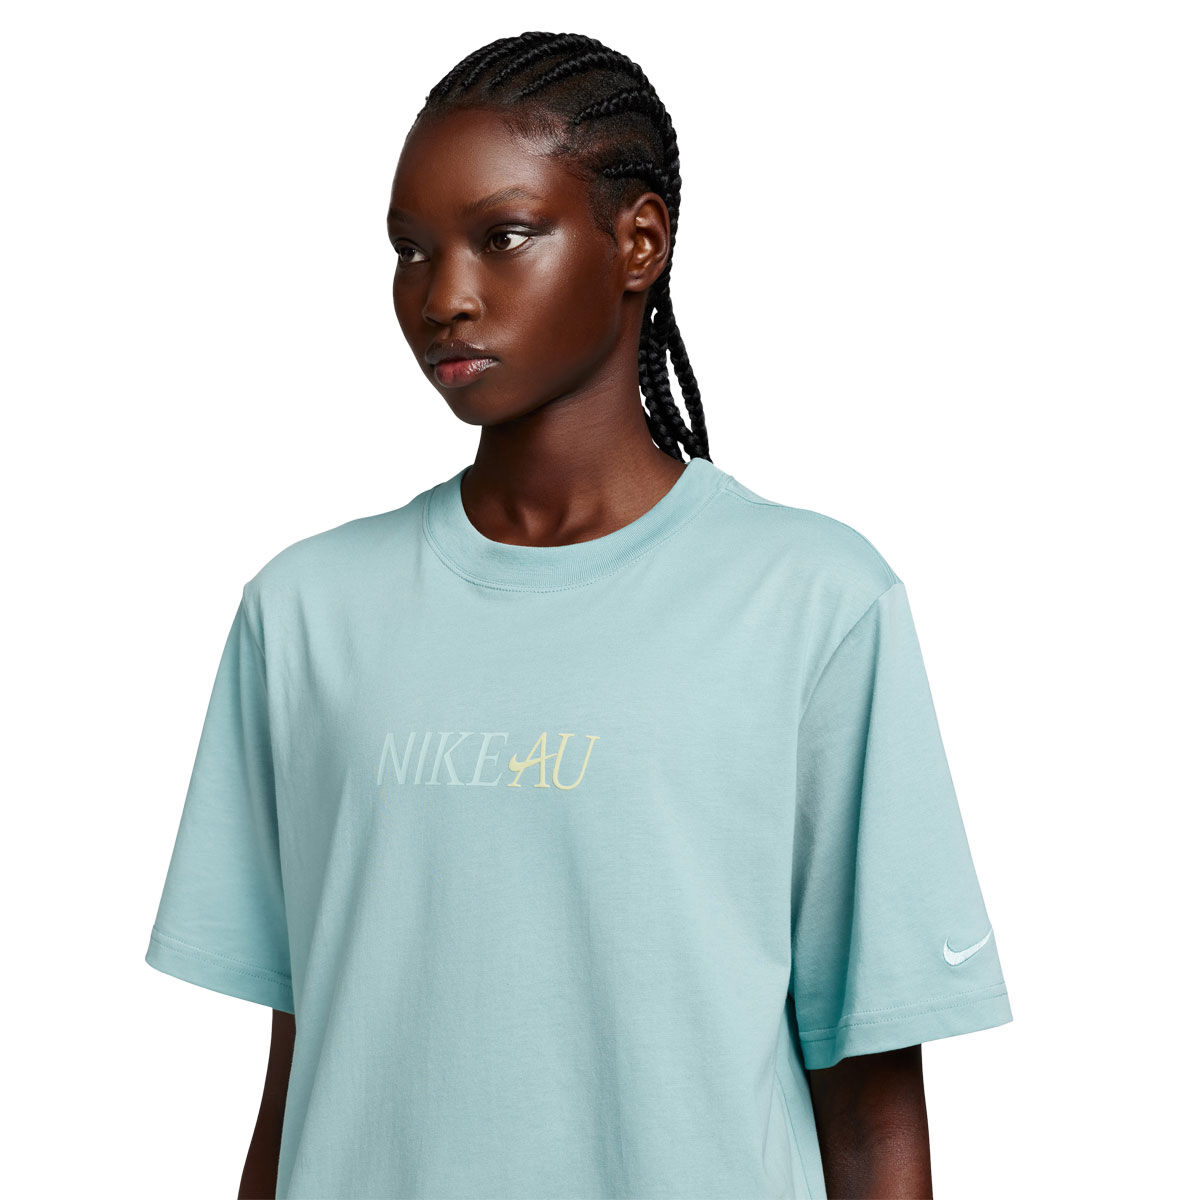 Nike AU Collection | Rebel Sport